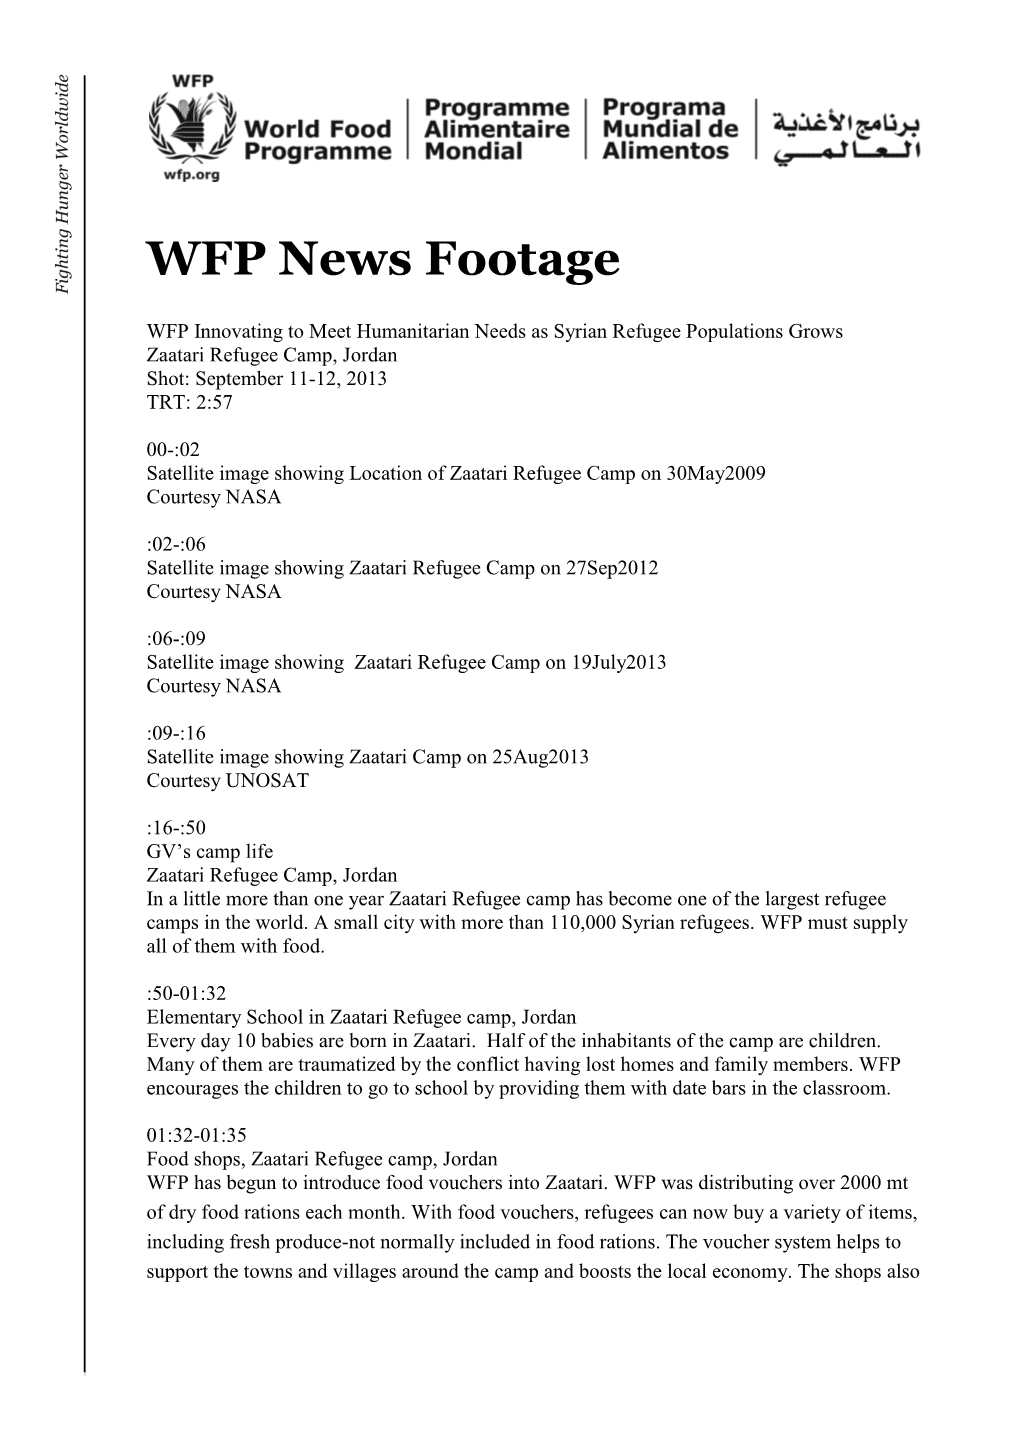 WFP News Footage